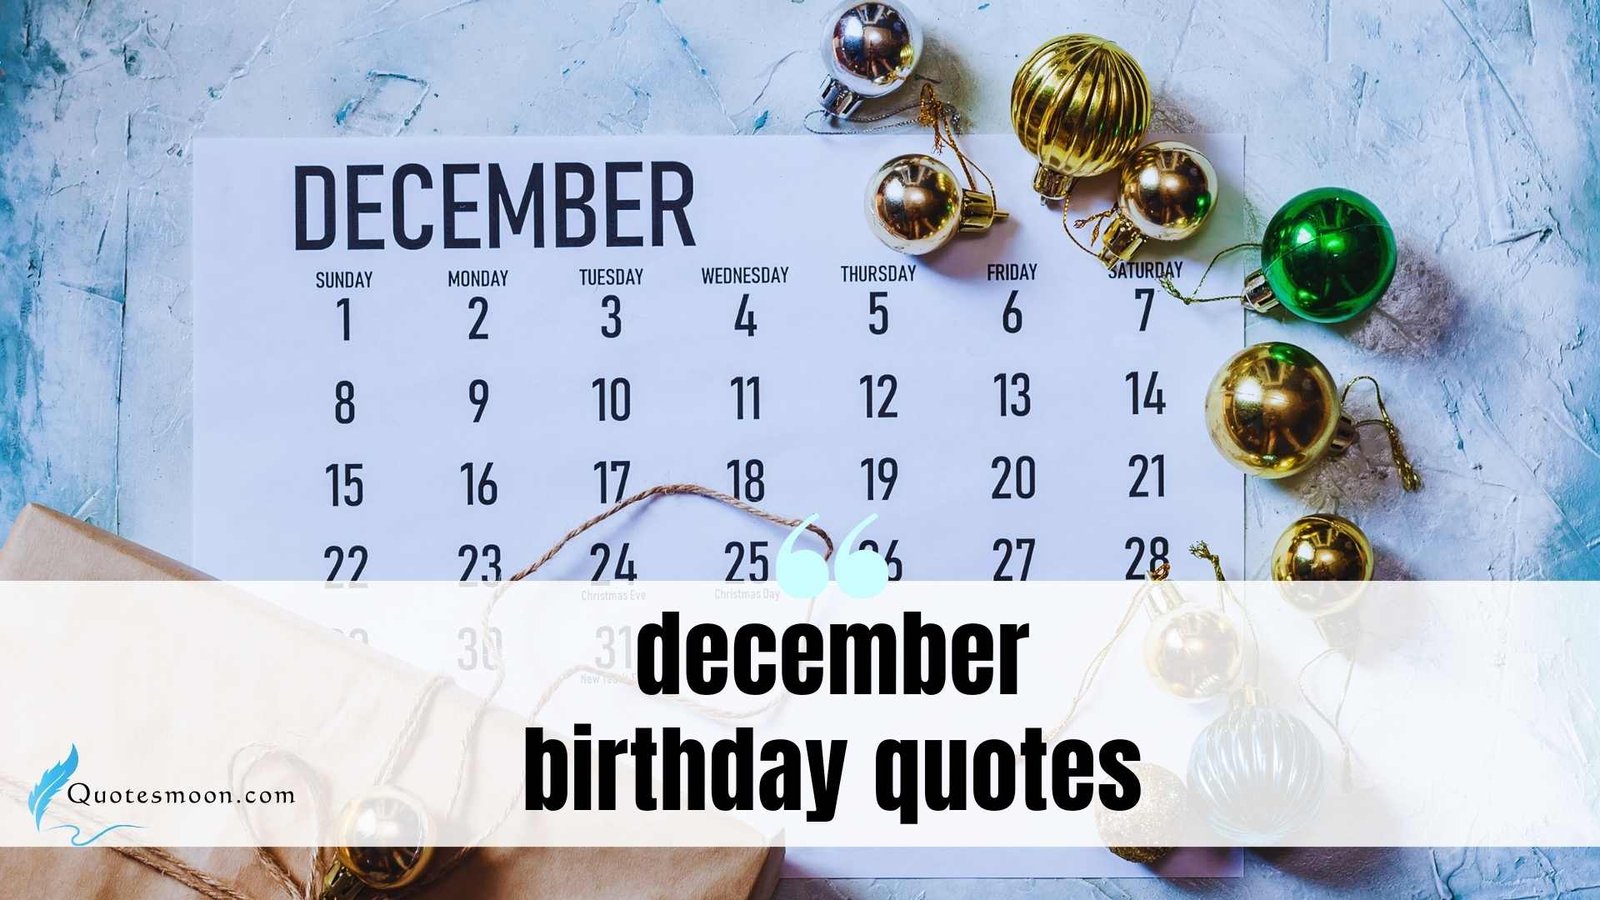 December Birthday Quotes